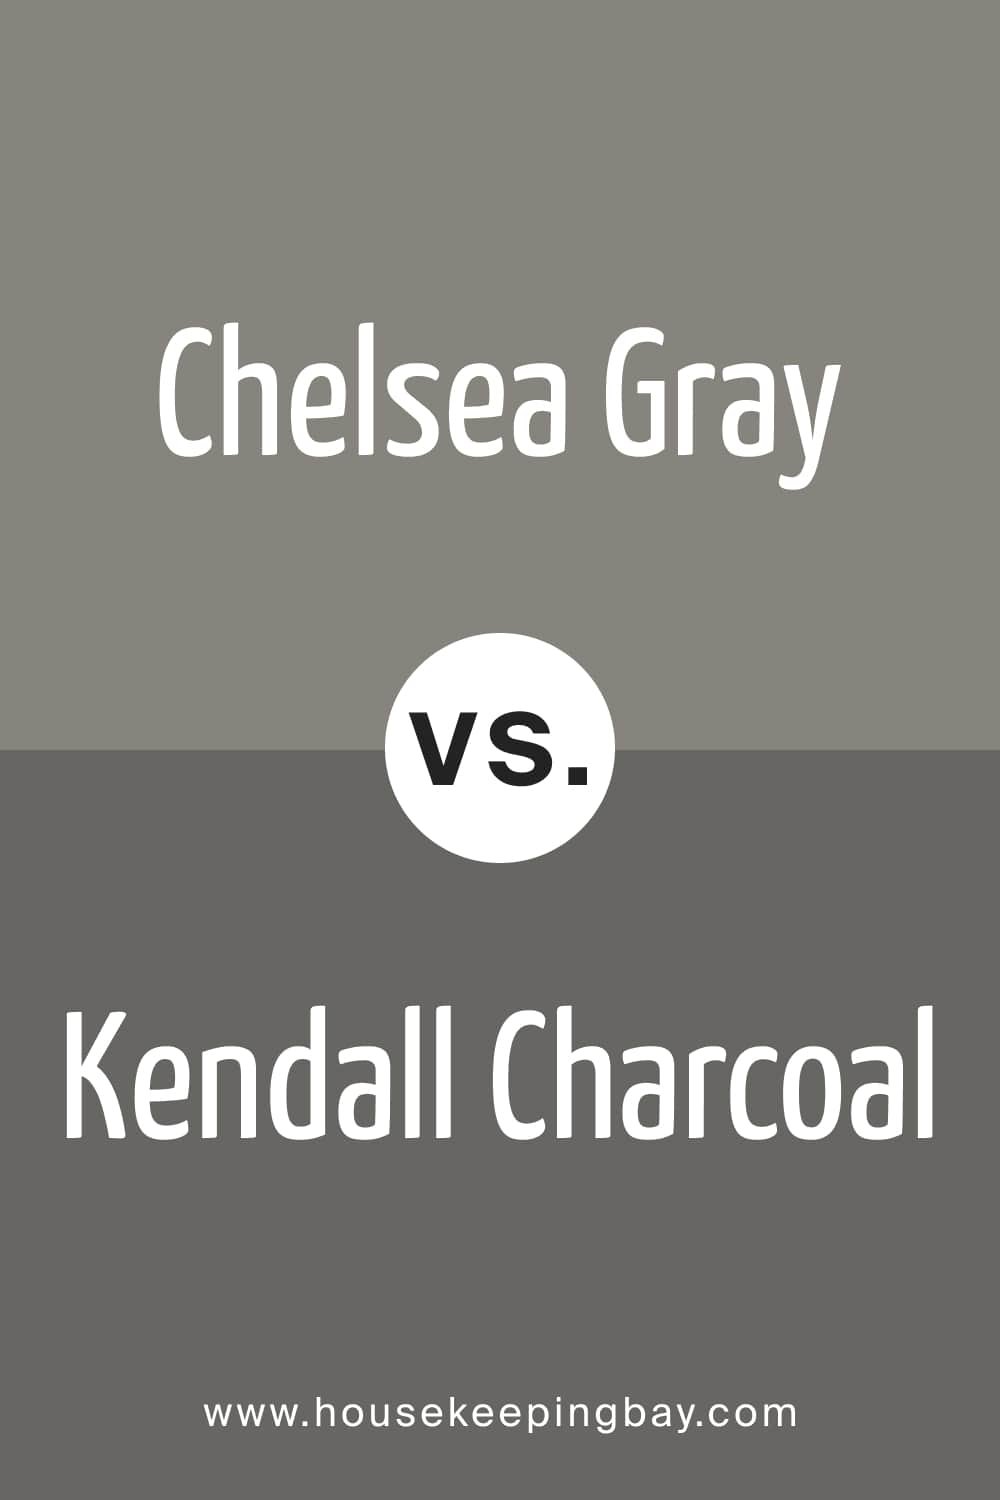 Chelsea Gray vs. Kendall Charcoal